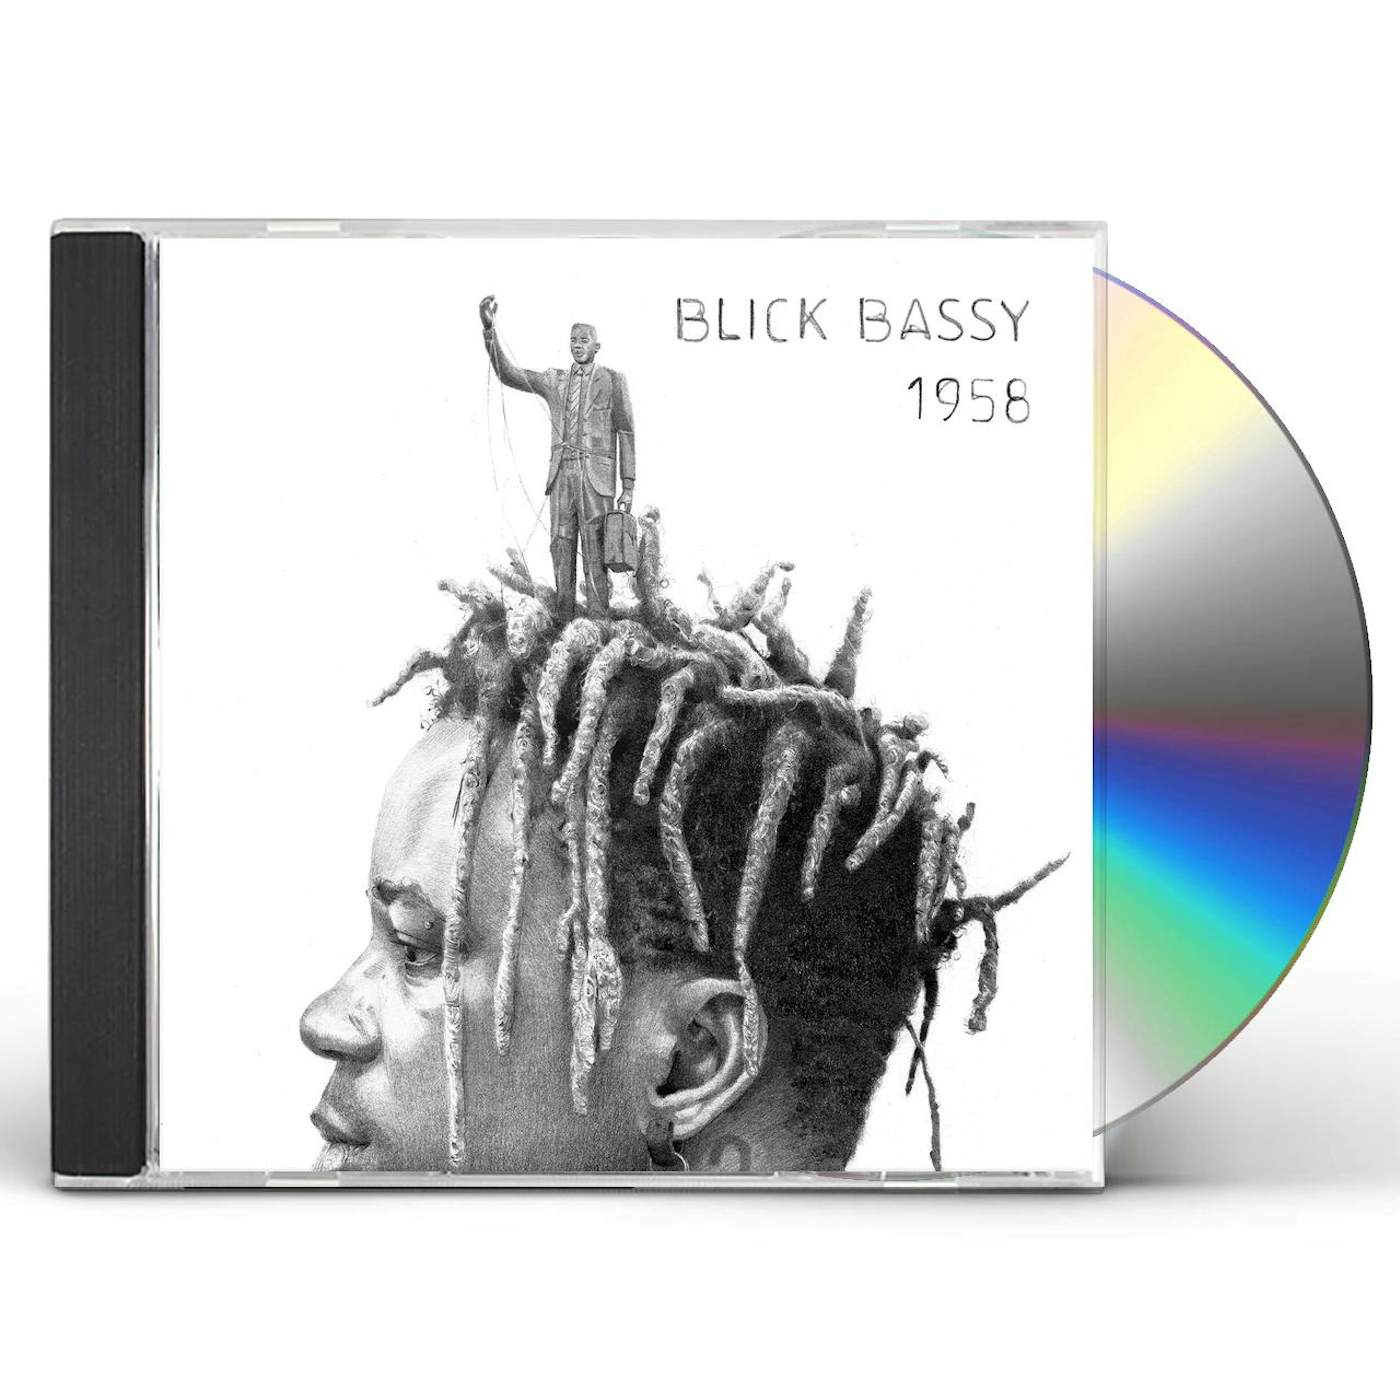 Blick Bassy 1958 CD